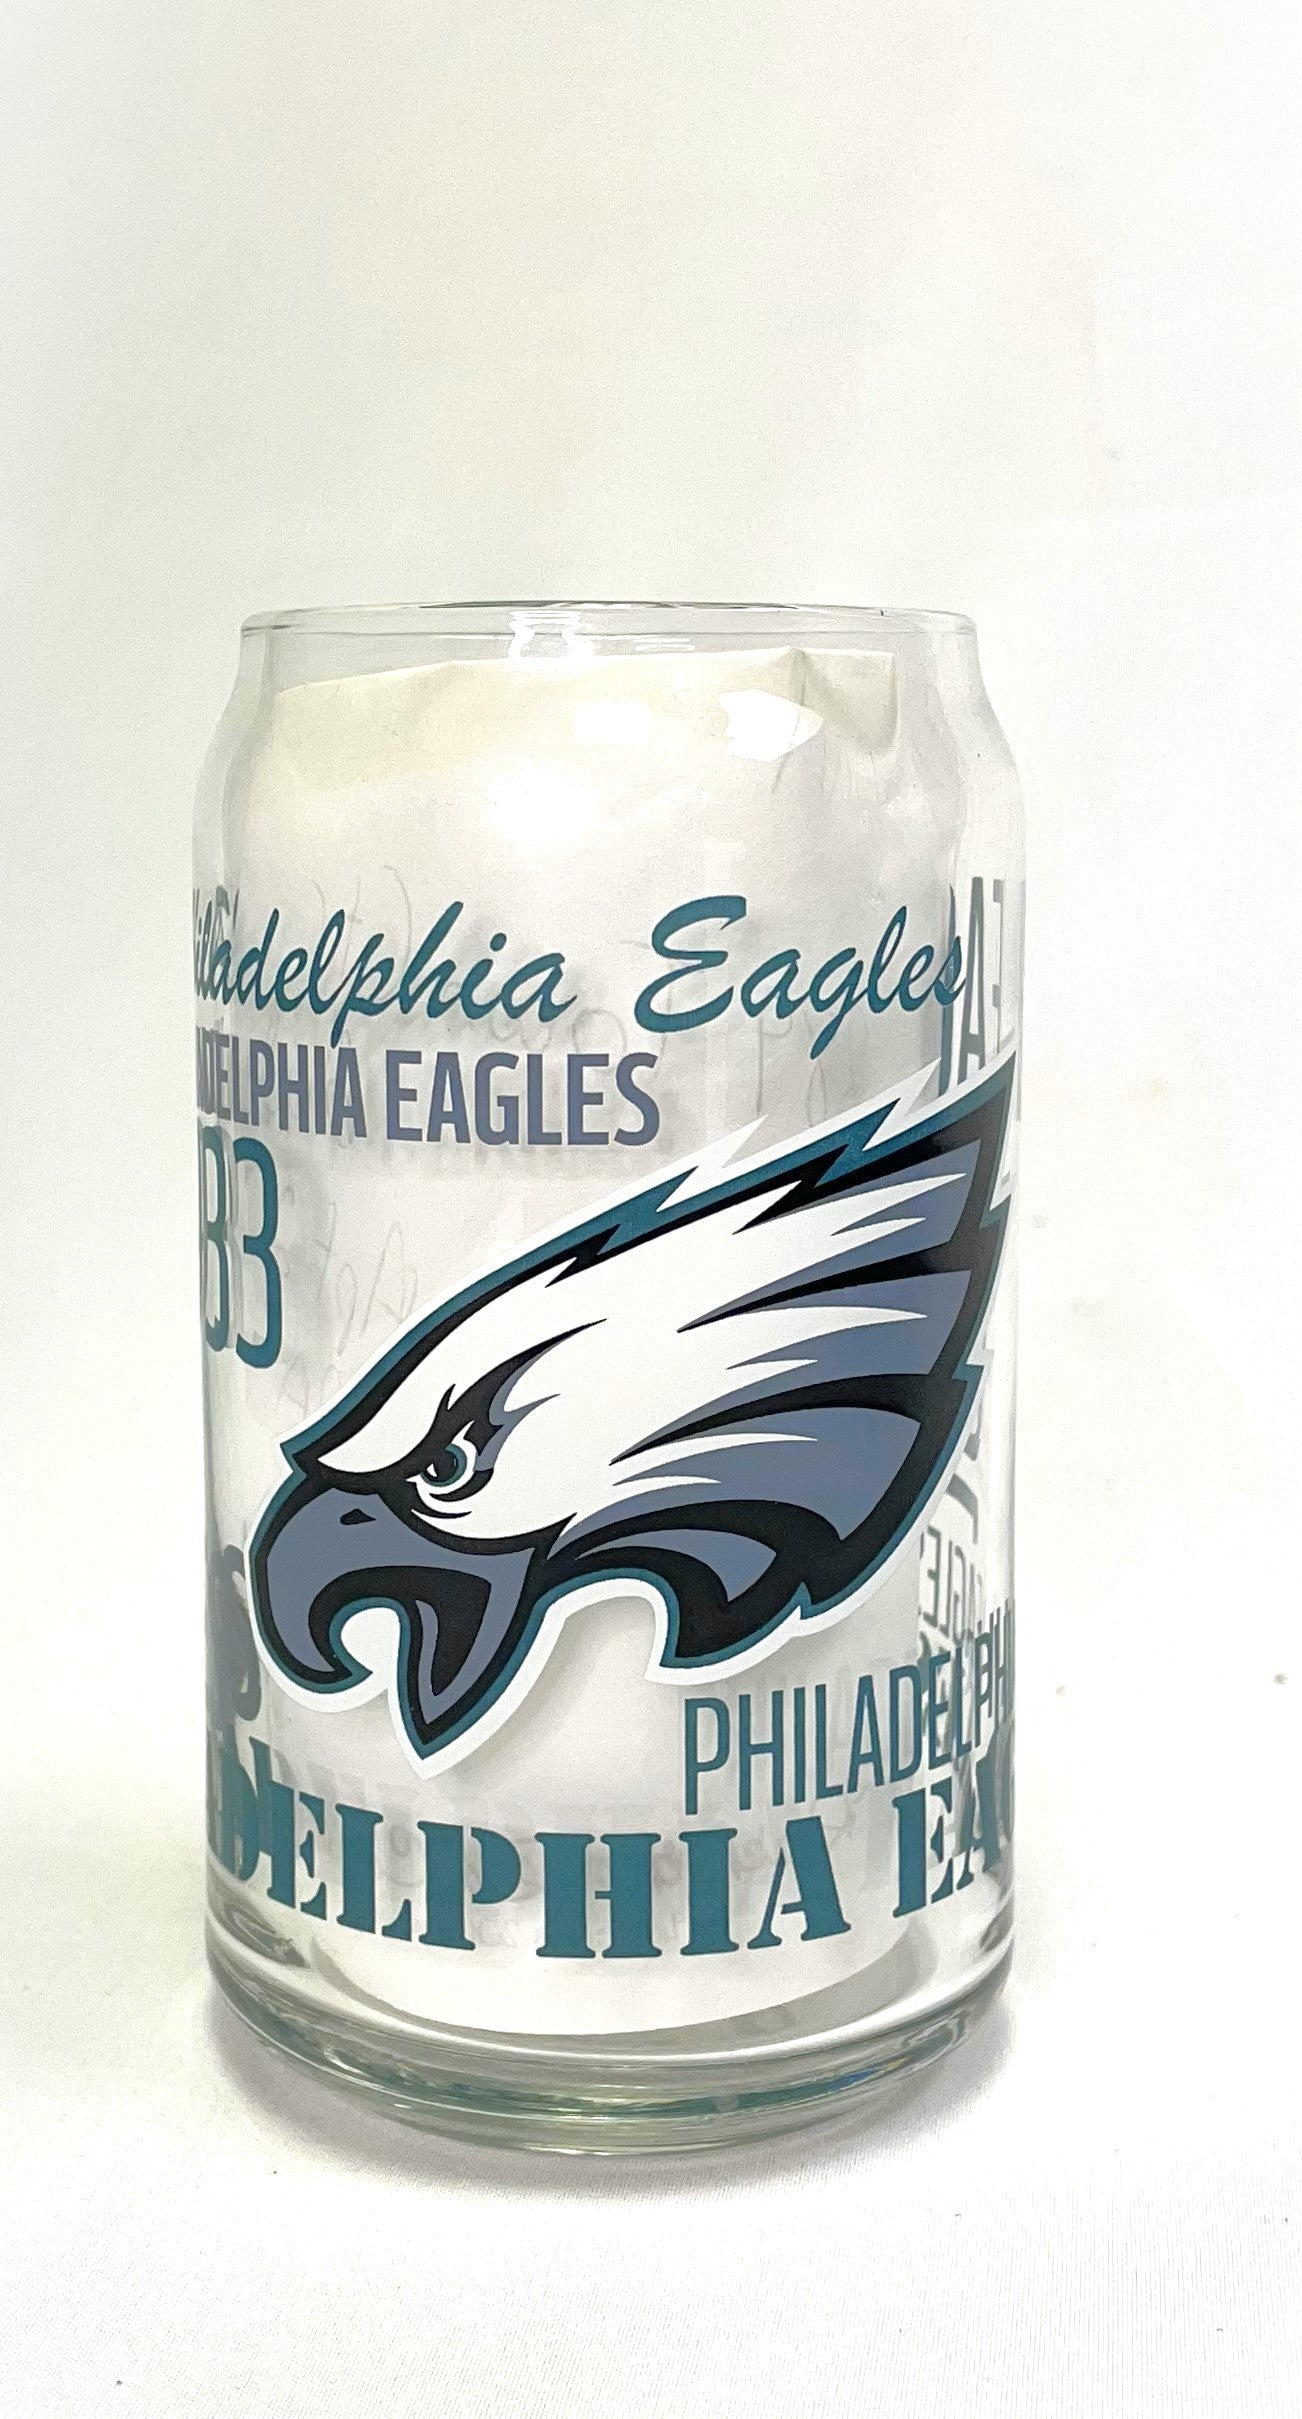 Philadelphia Eagles Pints